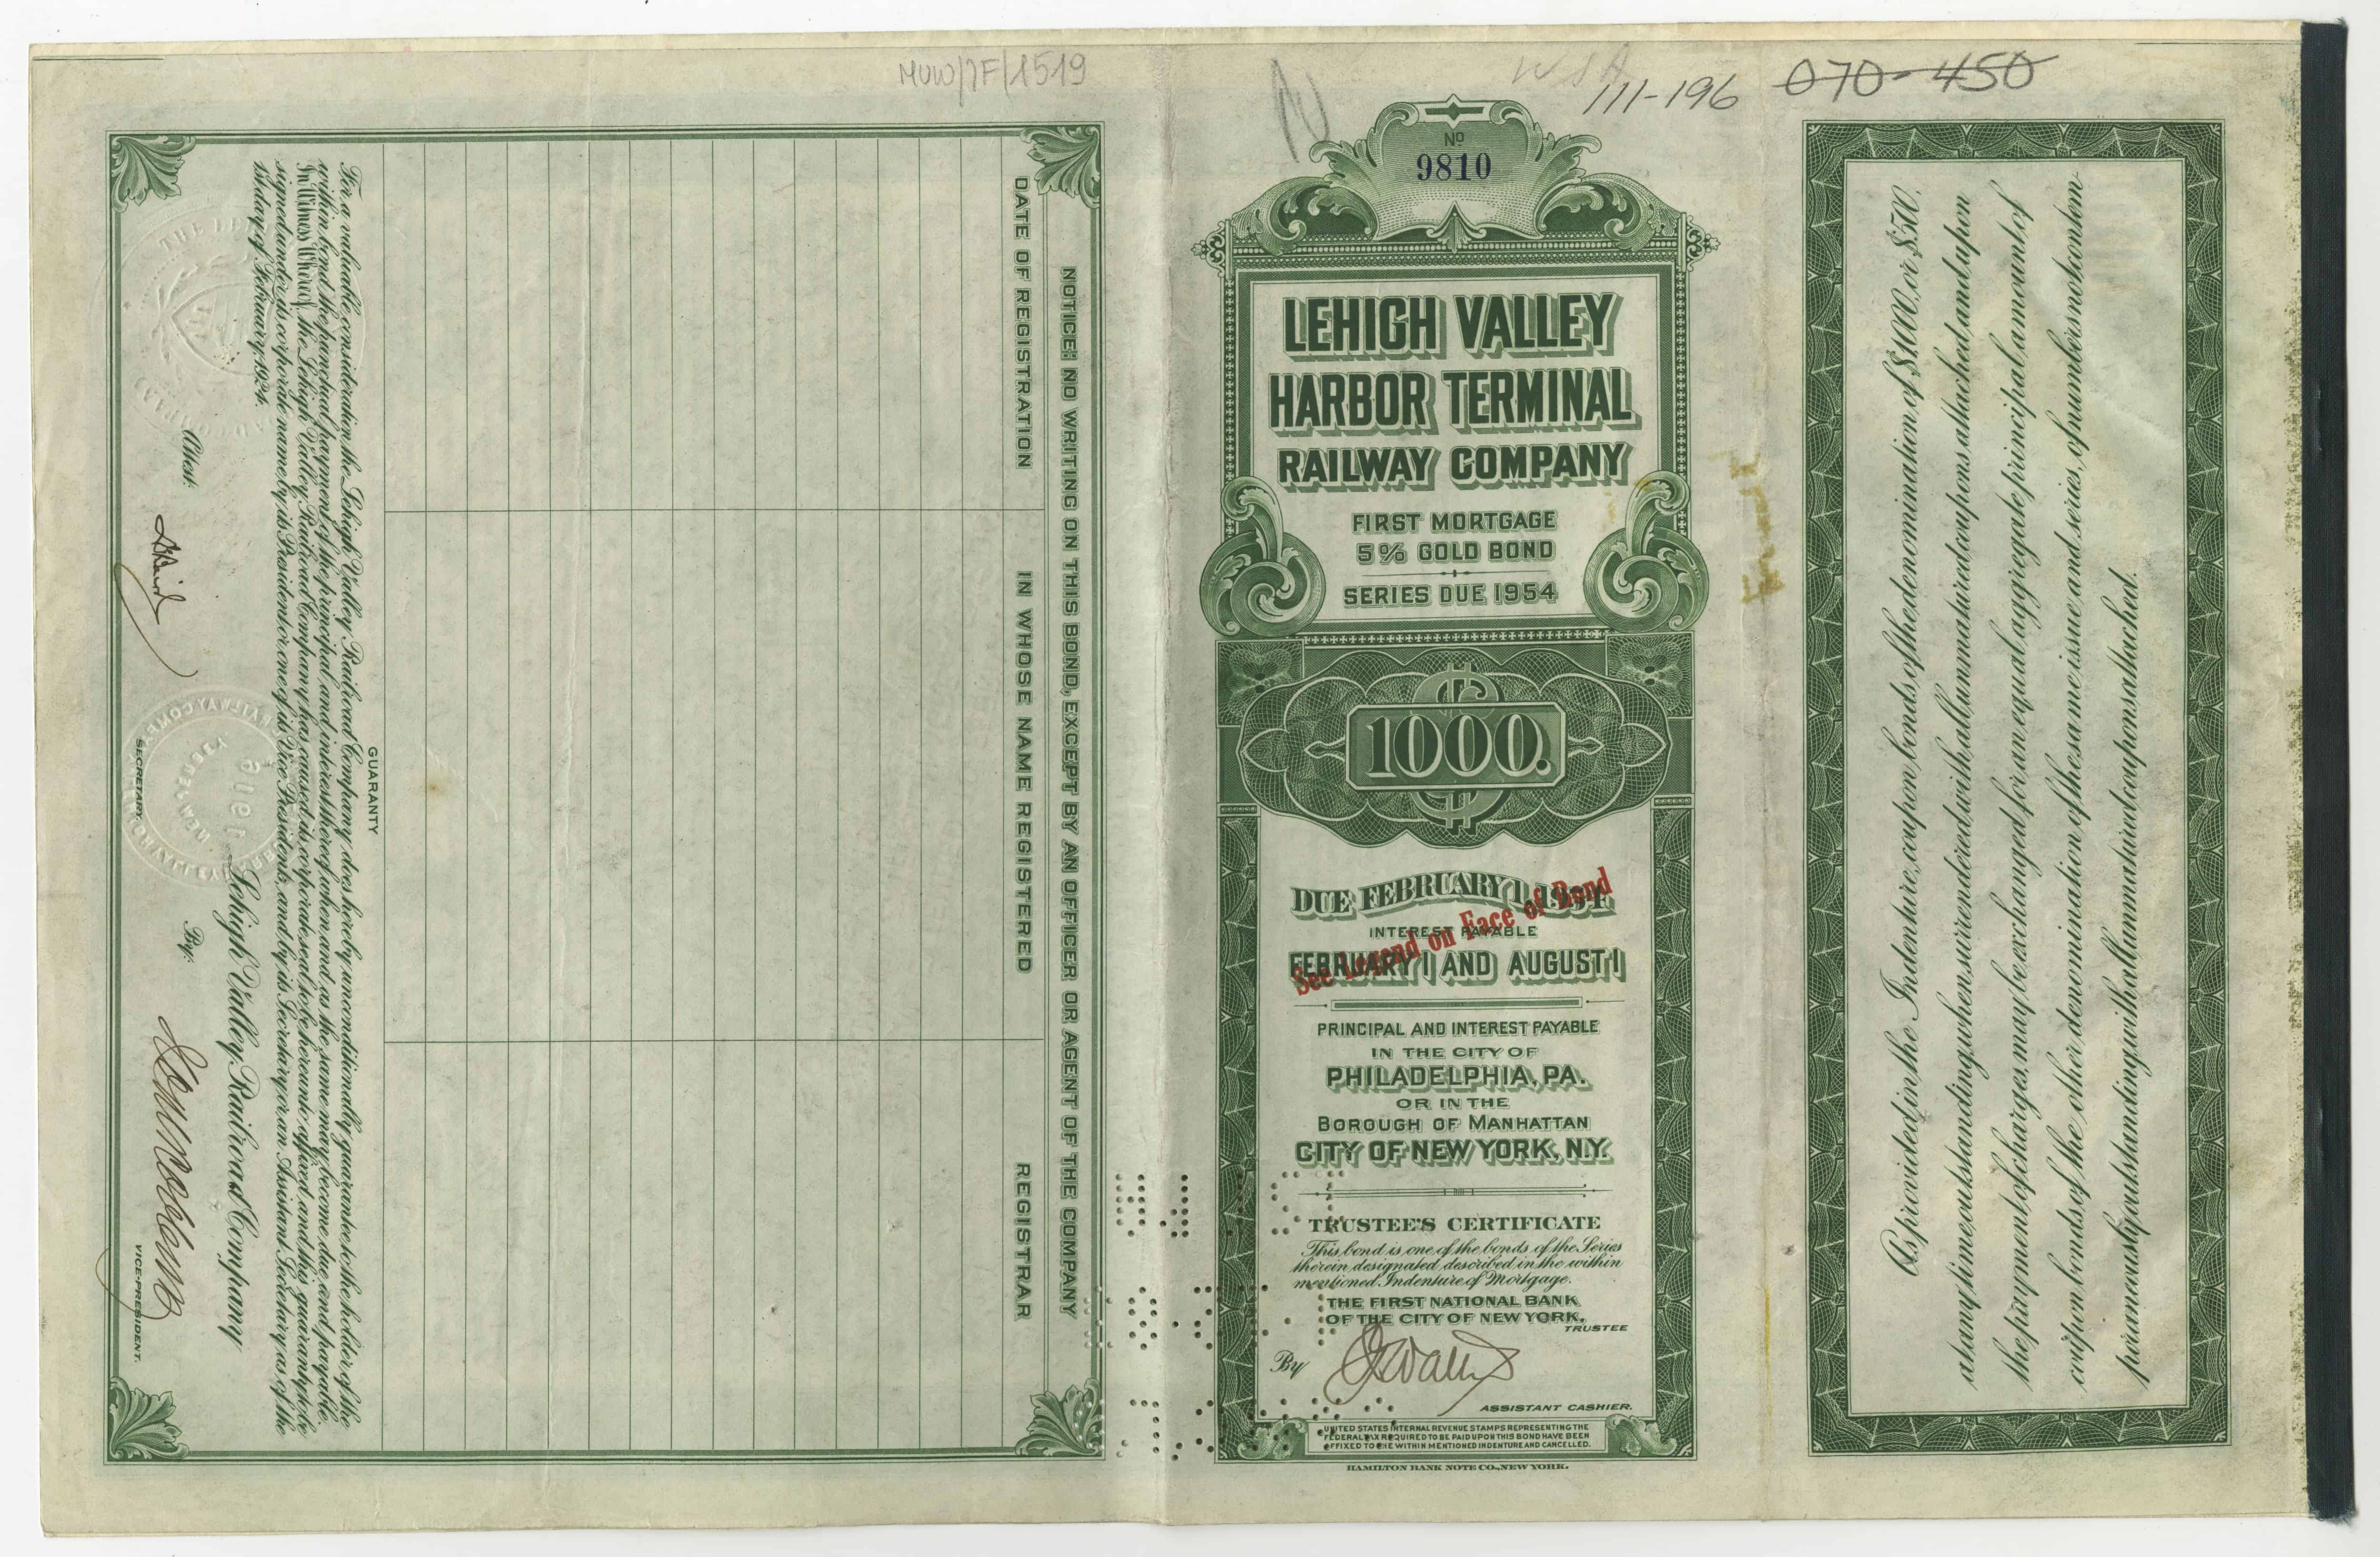 Obligacje Lehigh Valley Harbor Terminal Railway Company z 1 lutego 1924 roku